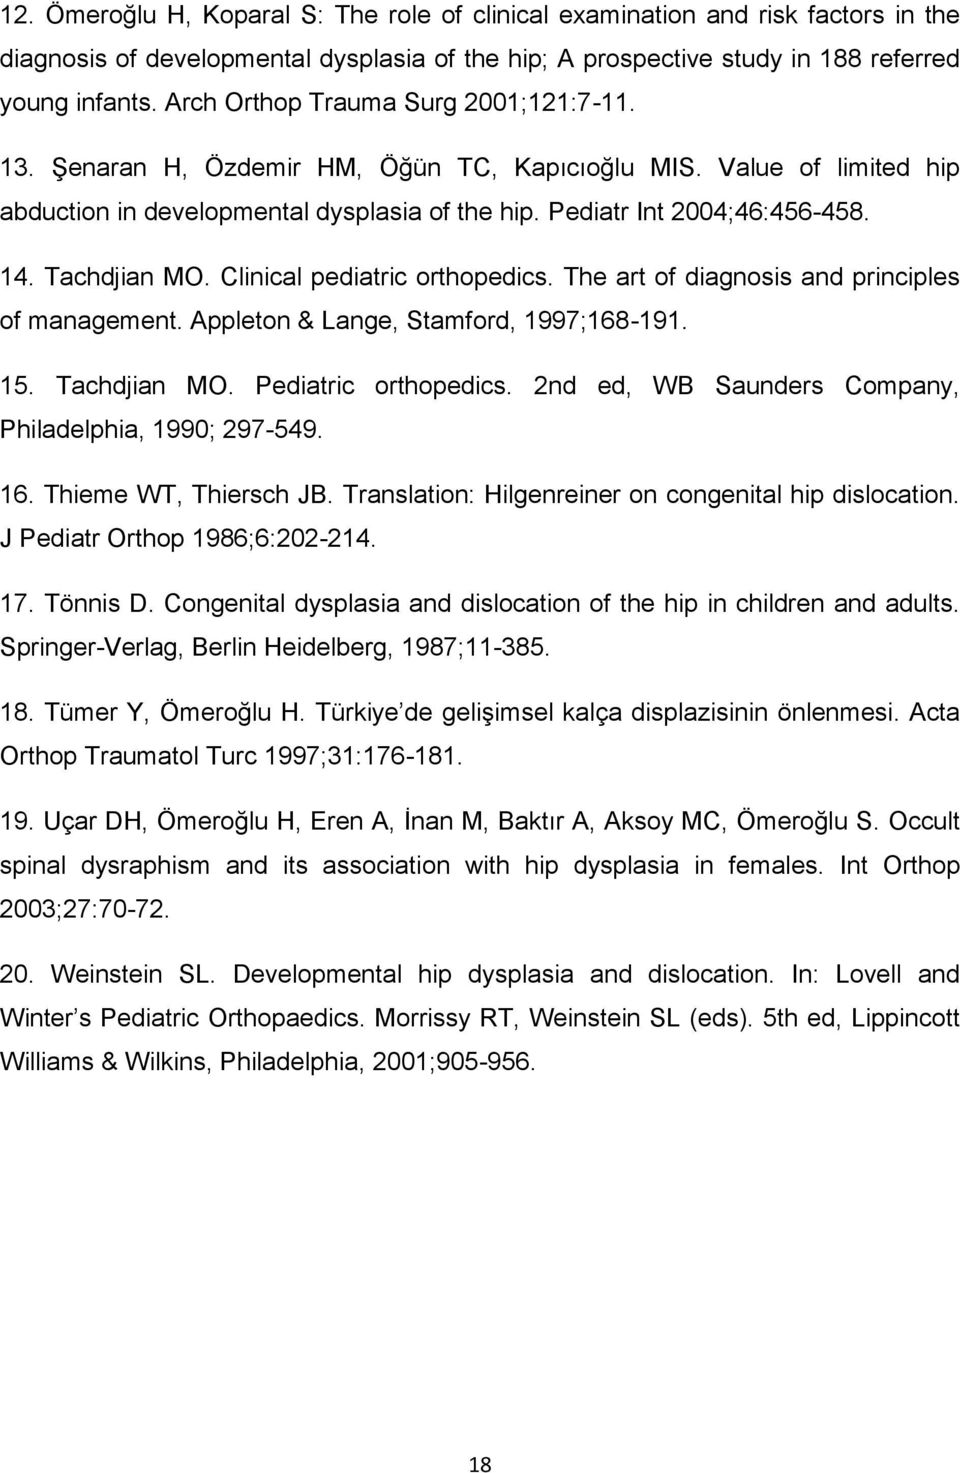 Tachdjian MO. Clinical pediatric orthopedics. The art of diagnosis and principles of management. Appleton & Lange, Stamford, 1997;168-191. 15. Tachdjian MO. Pediatric orthopedics.